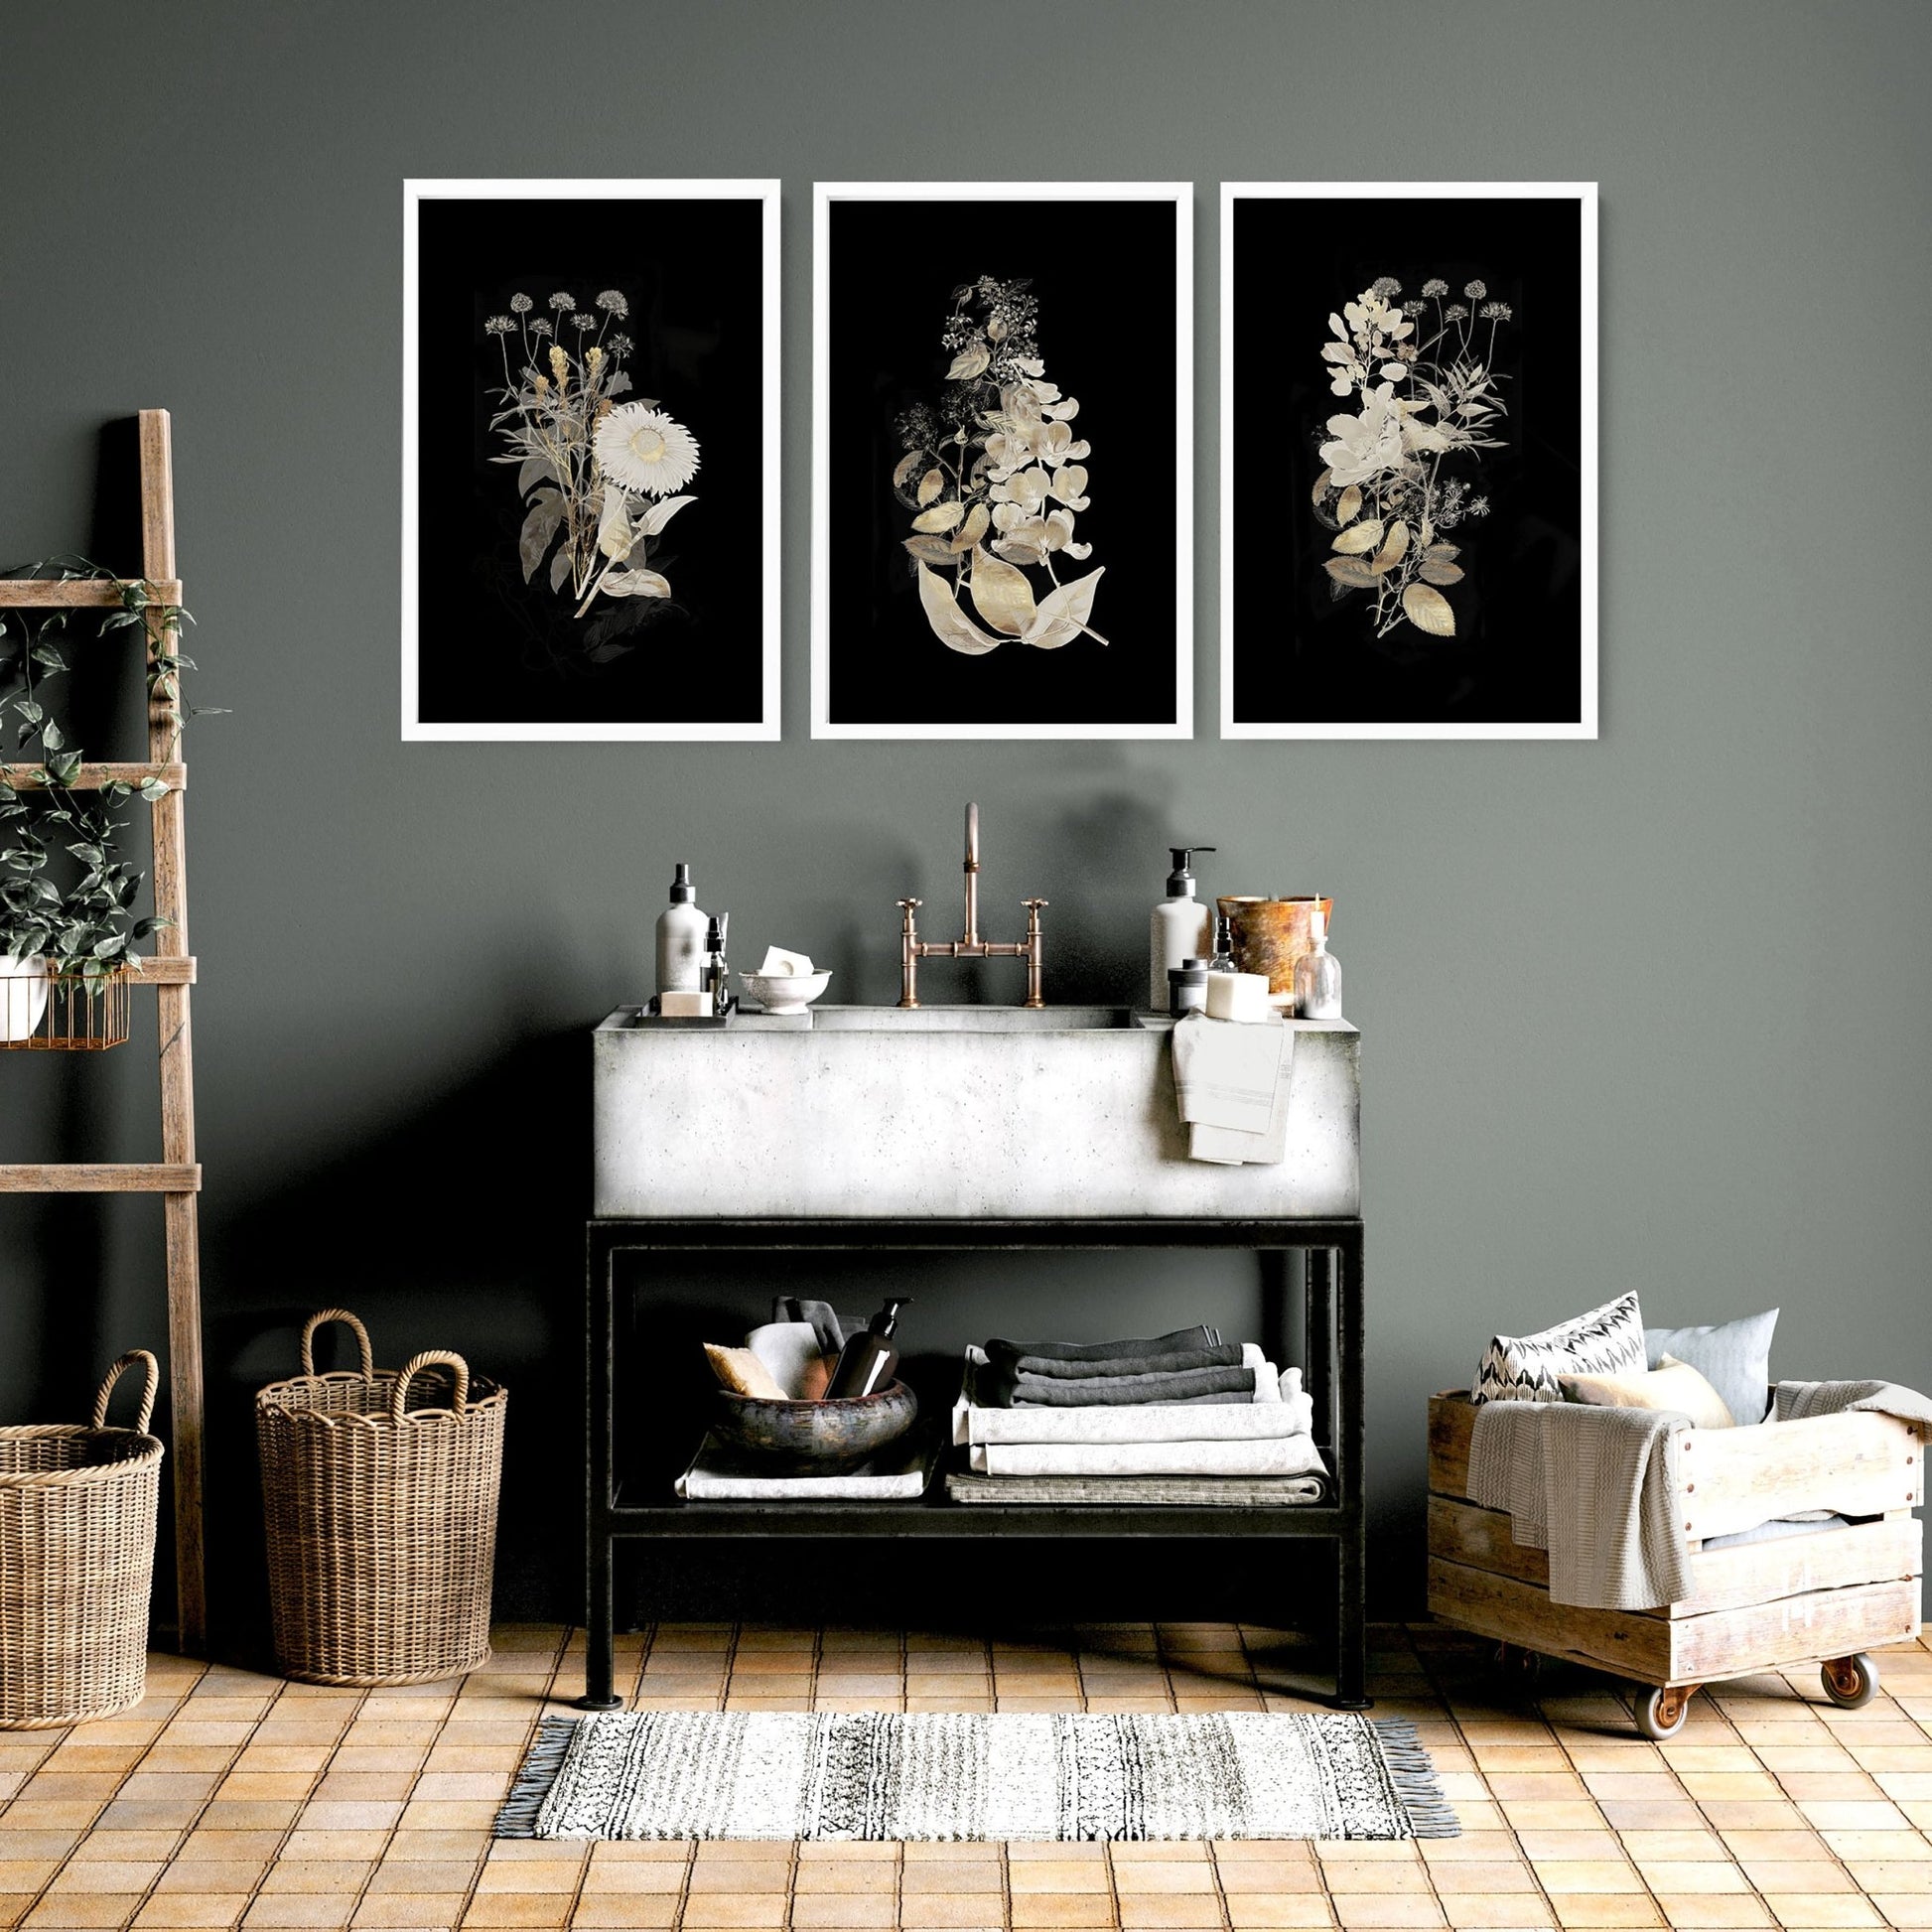 Bathroom decor for walls | set of 3 wall art prints - About Wall Art